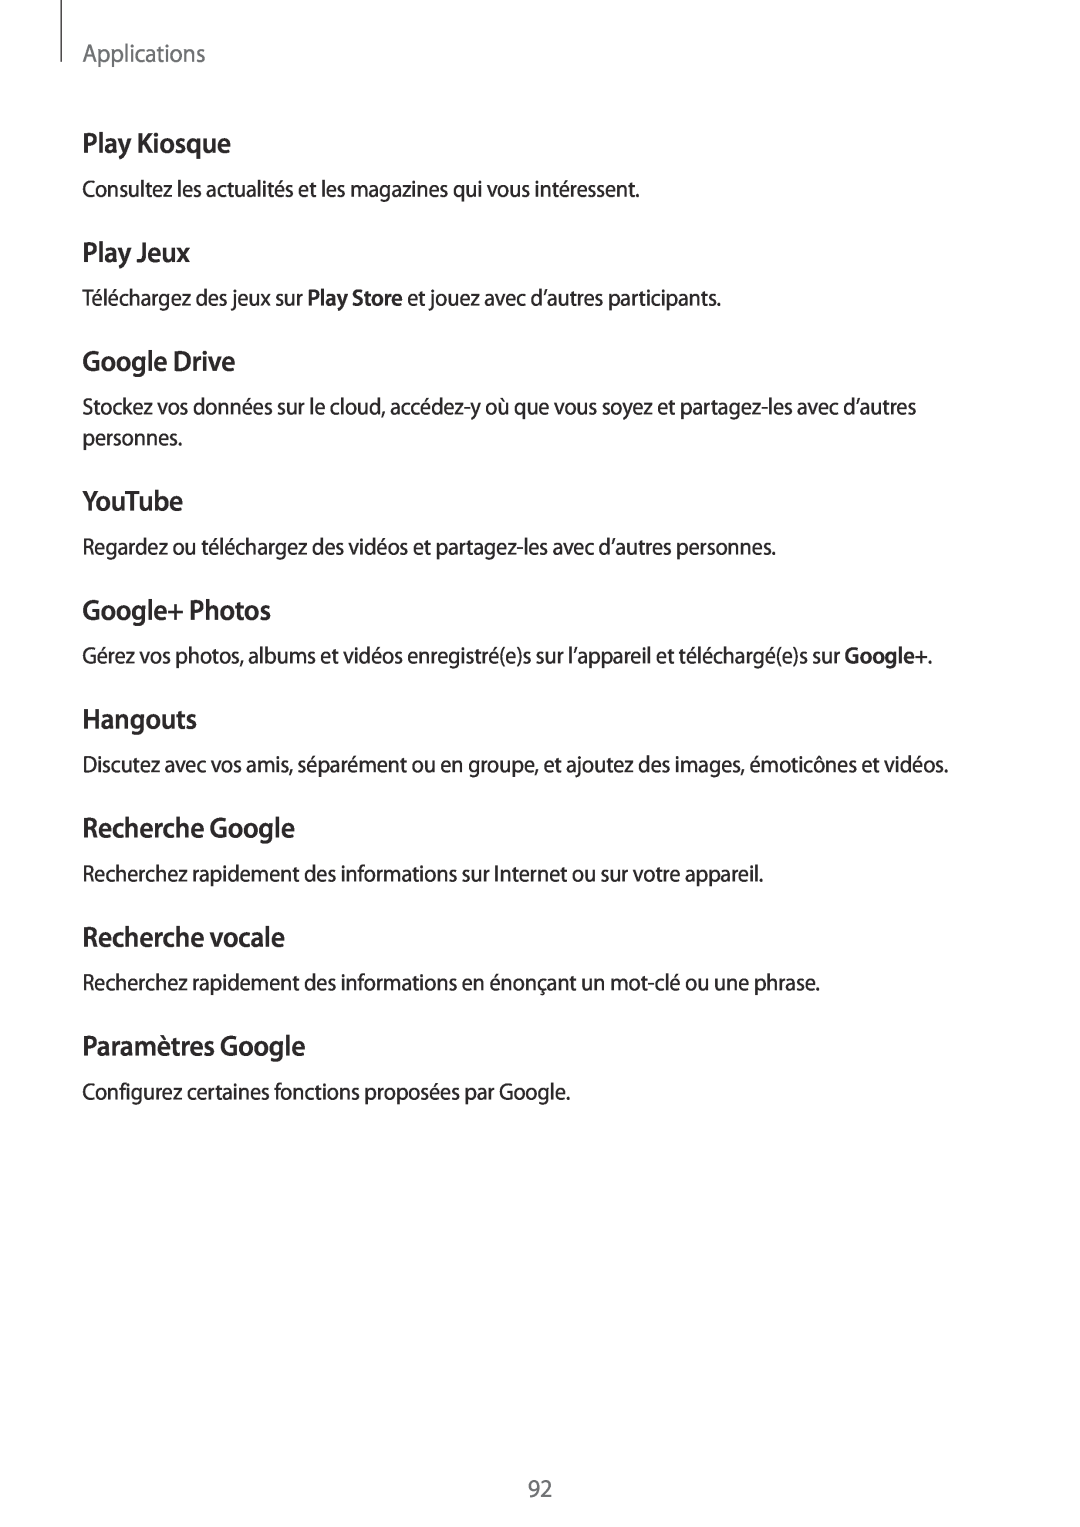 Samsung SM-G920FZWAXEF manual Play Kiosque, Play Jeux, Google Drive, YouTube, Google+ Photos, Hangouts, Recherche Google 